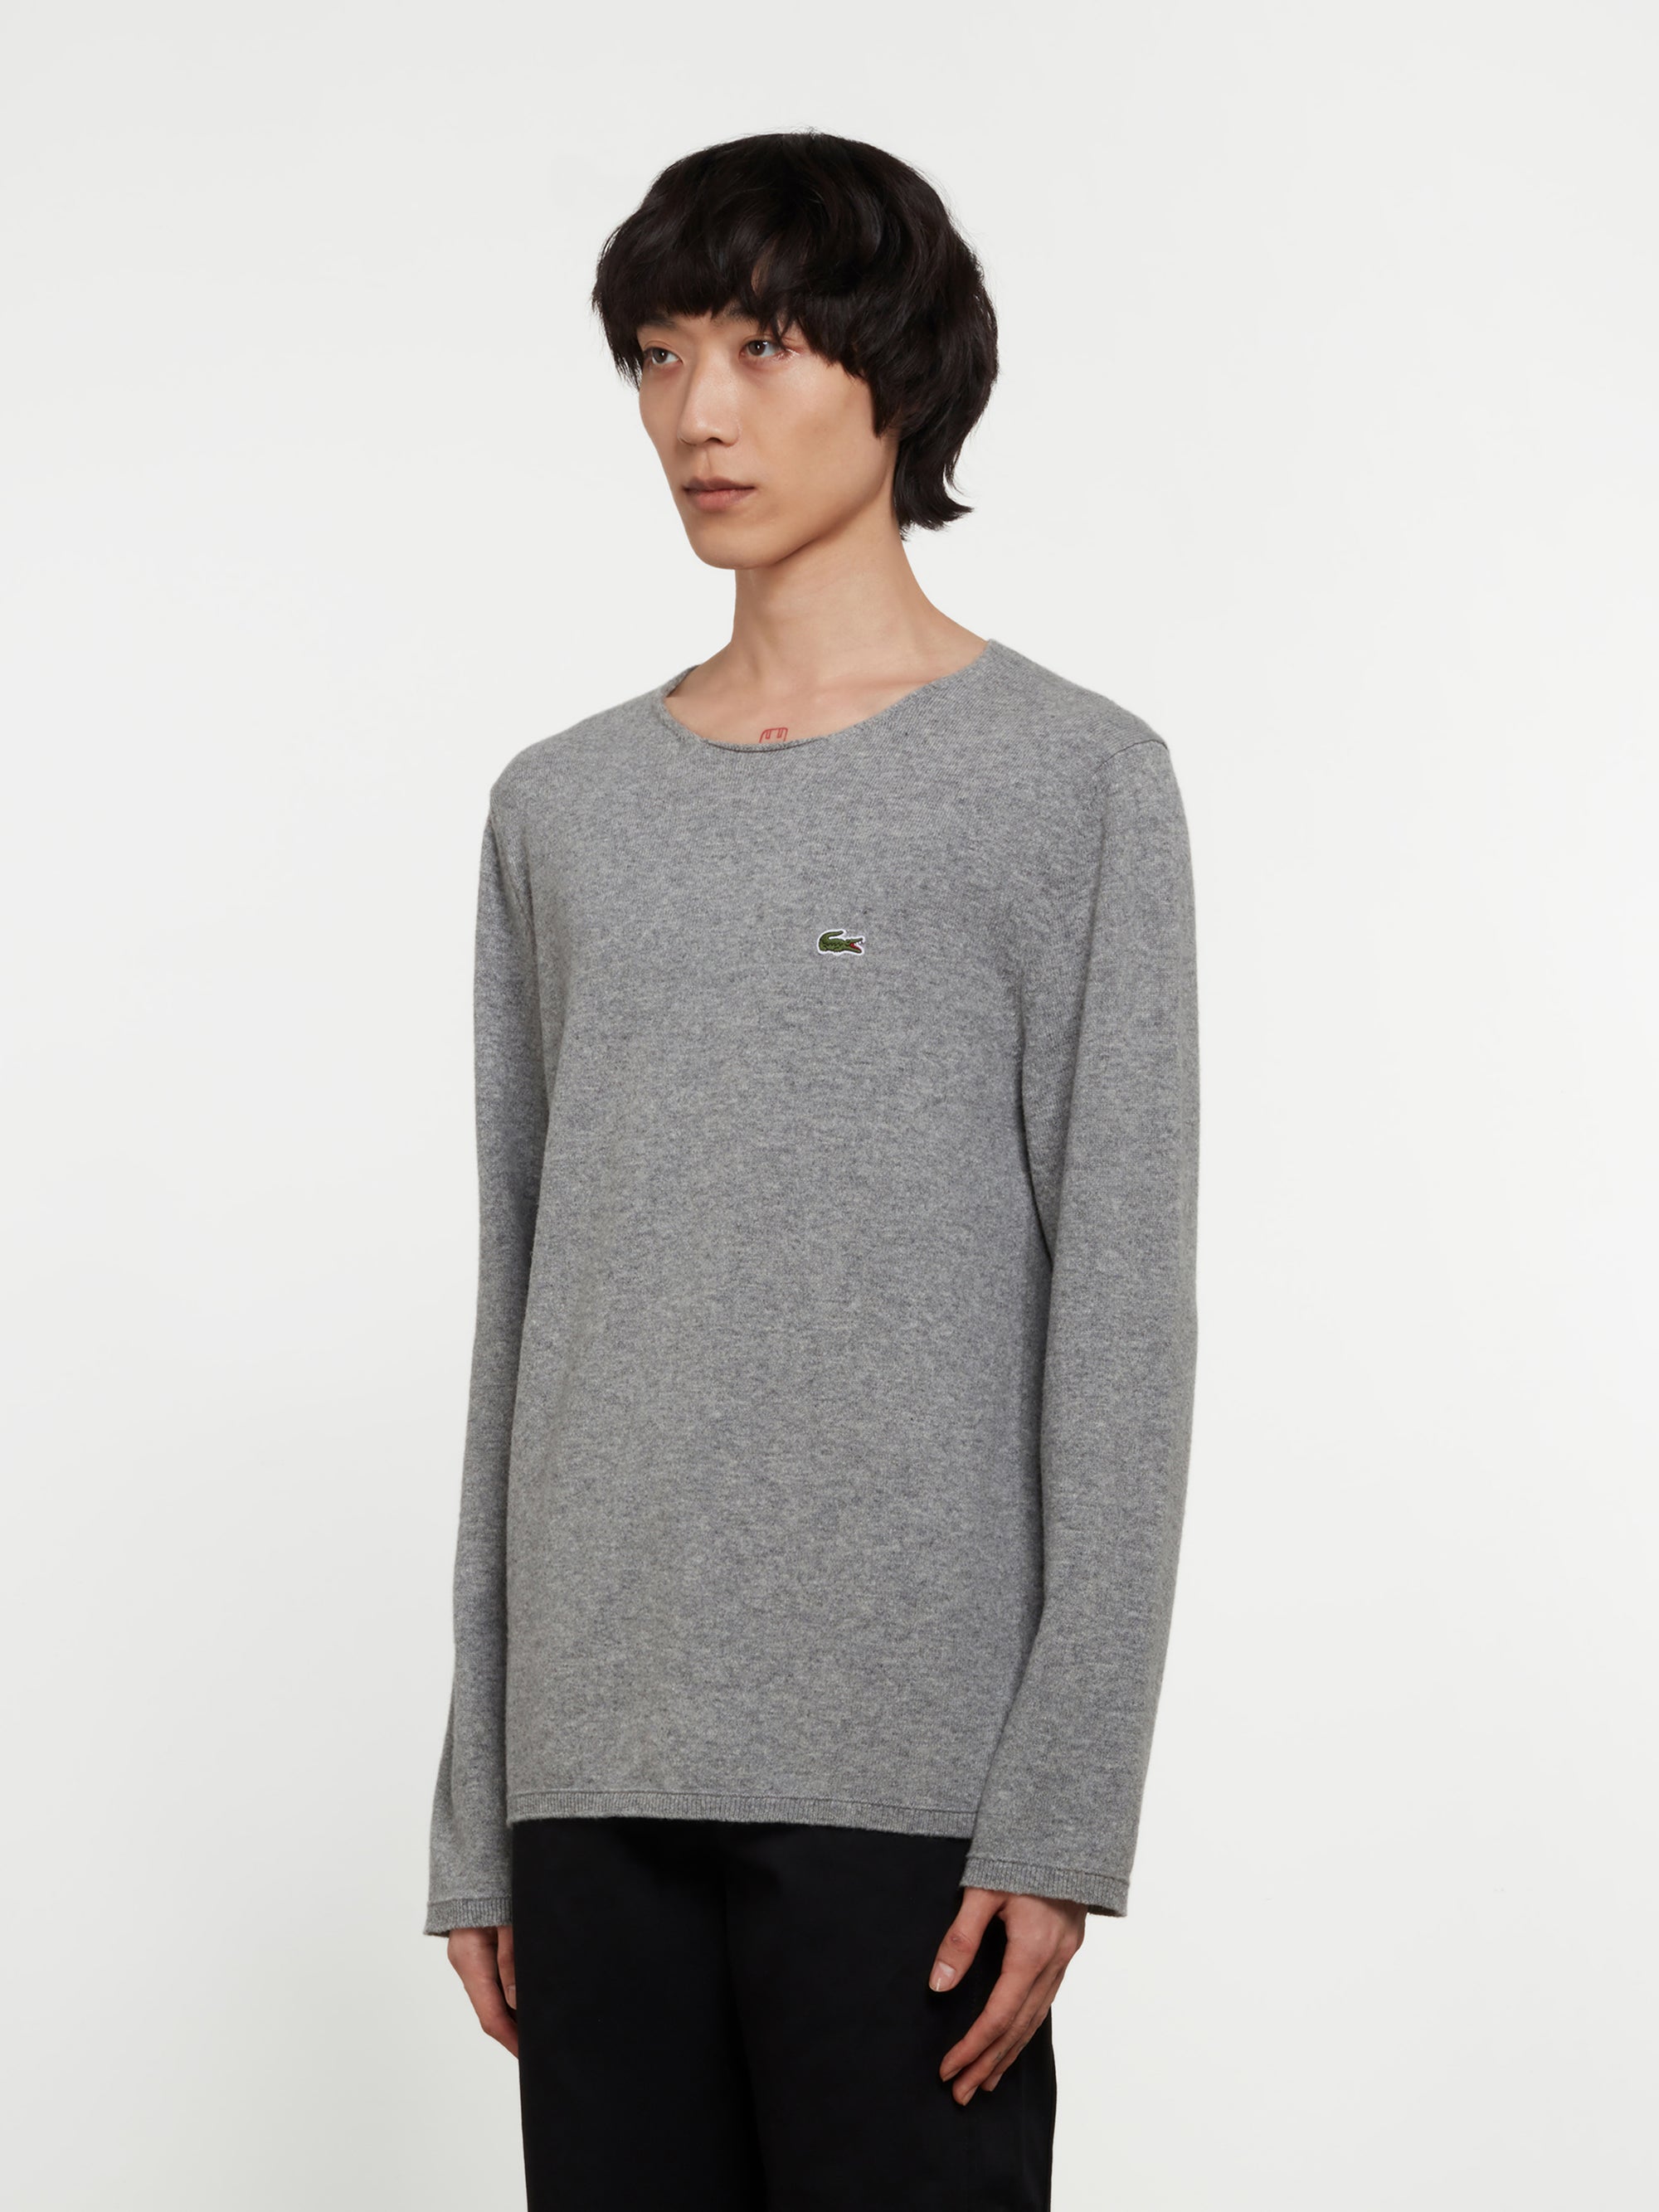 CDG Shirt - Lacoste Men’s Sweater - (Grey) view 2